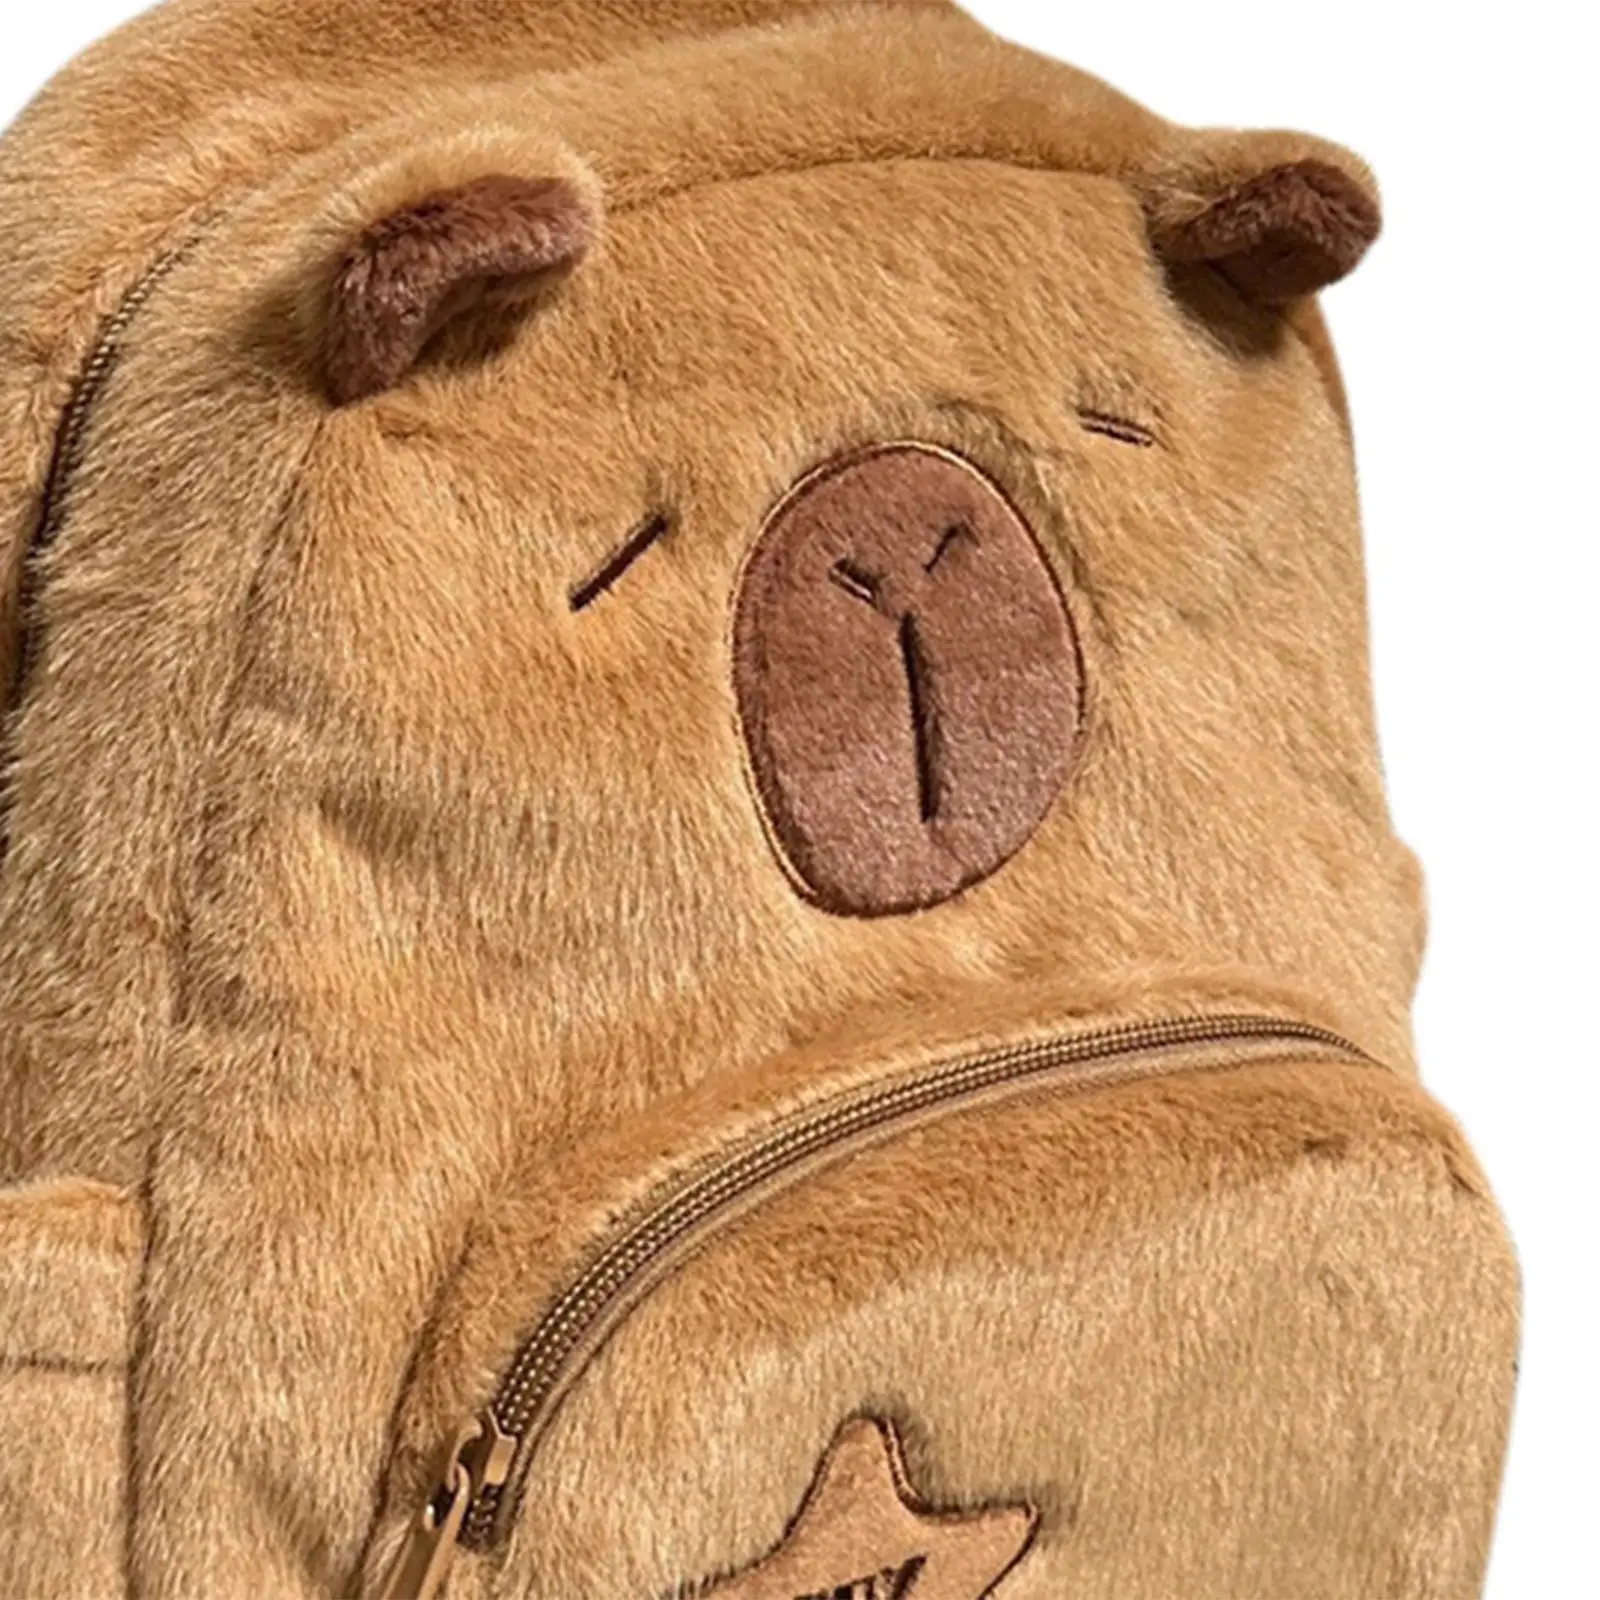 Plush Capybara Backpack Travel Backpack Casual Rucksack Cartoon Cute School Bag Bookbag for Girls Teens Adults College Student